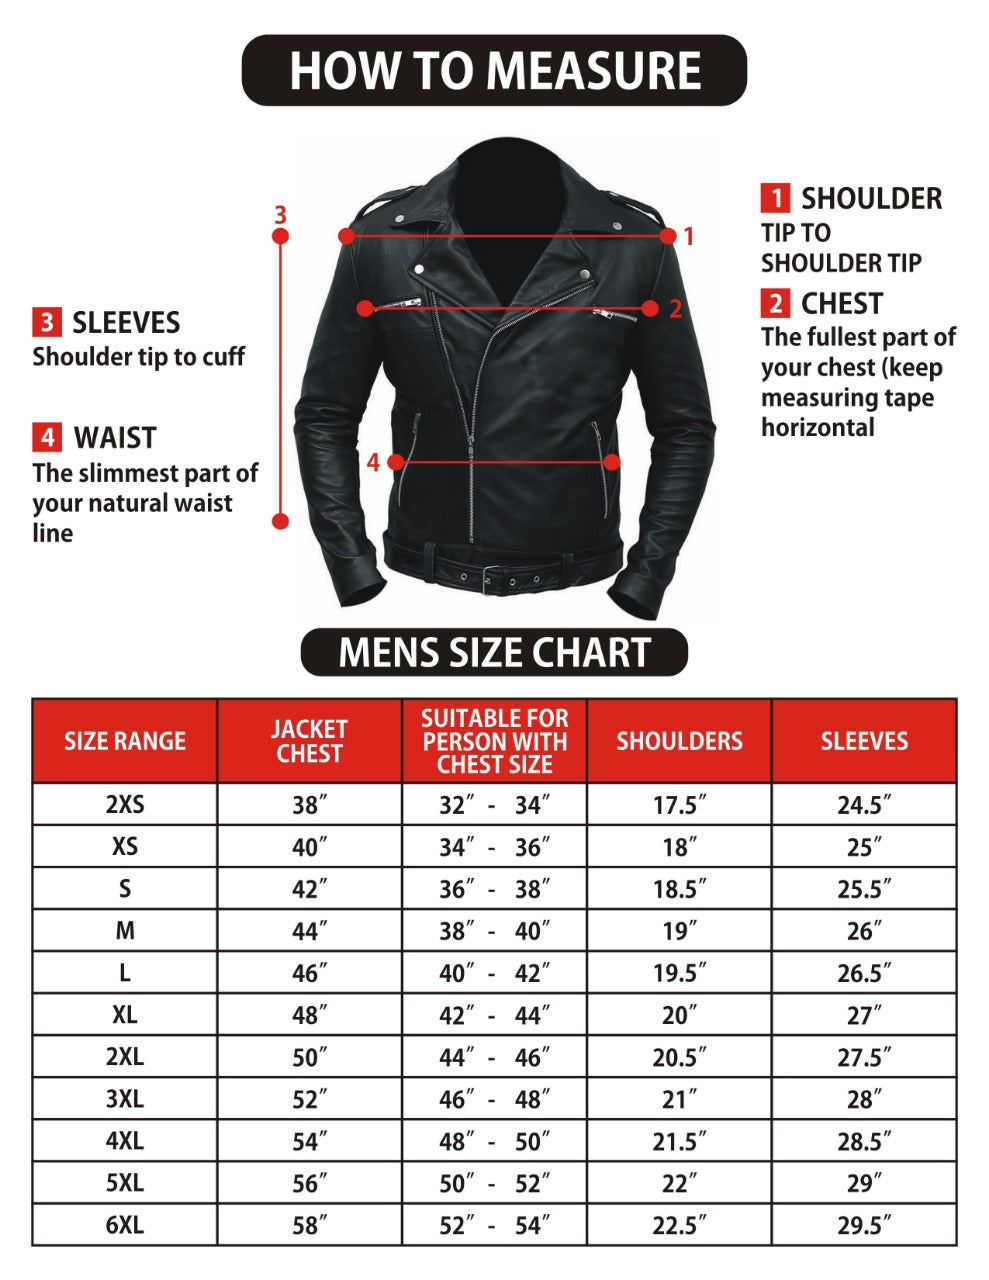 Spine Spark Men's Brown Bomber Pilot Style Leather Jacket